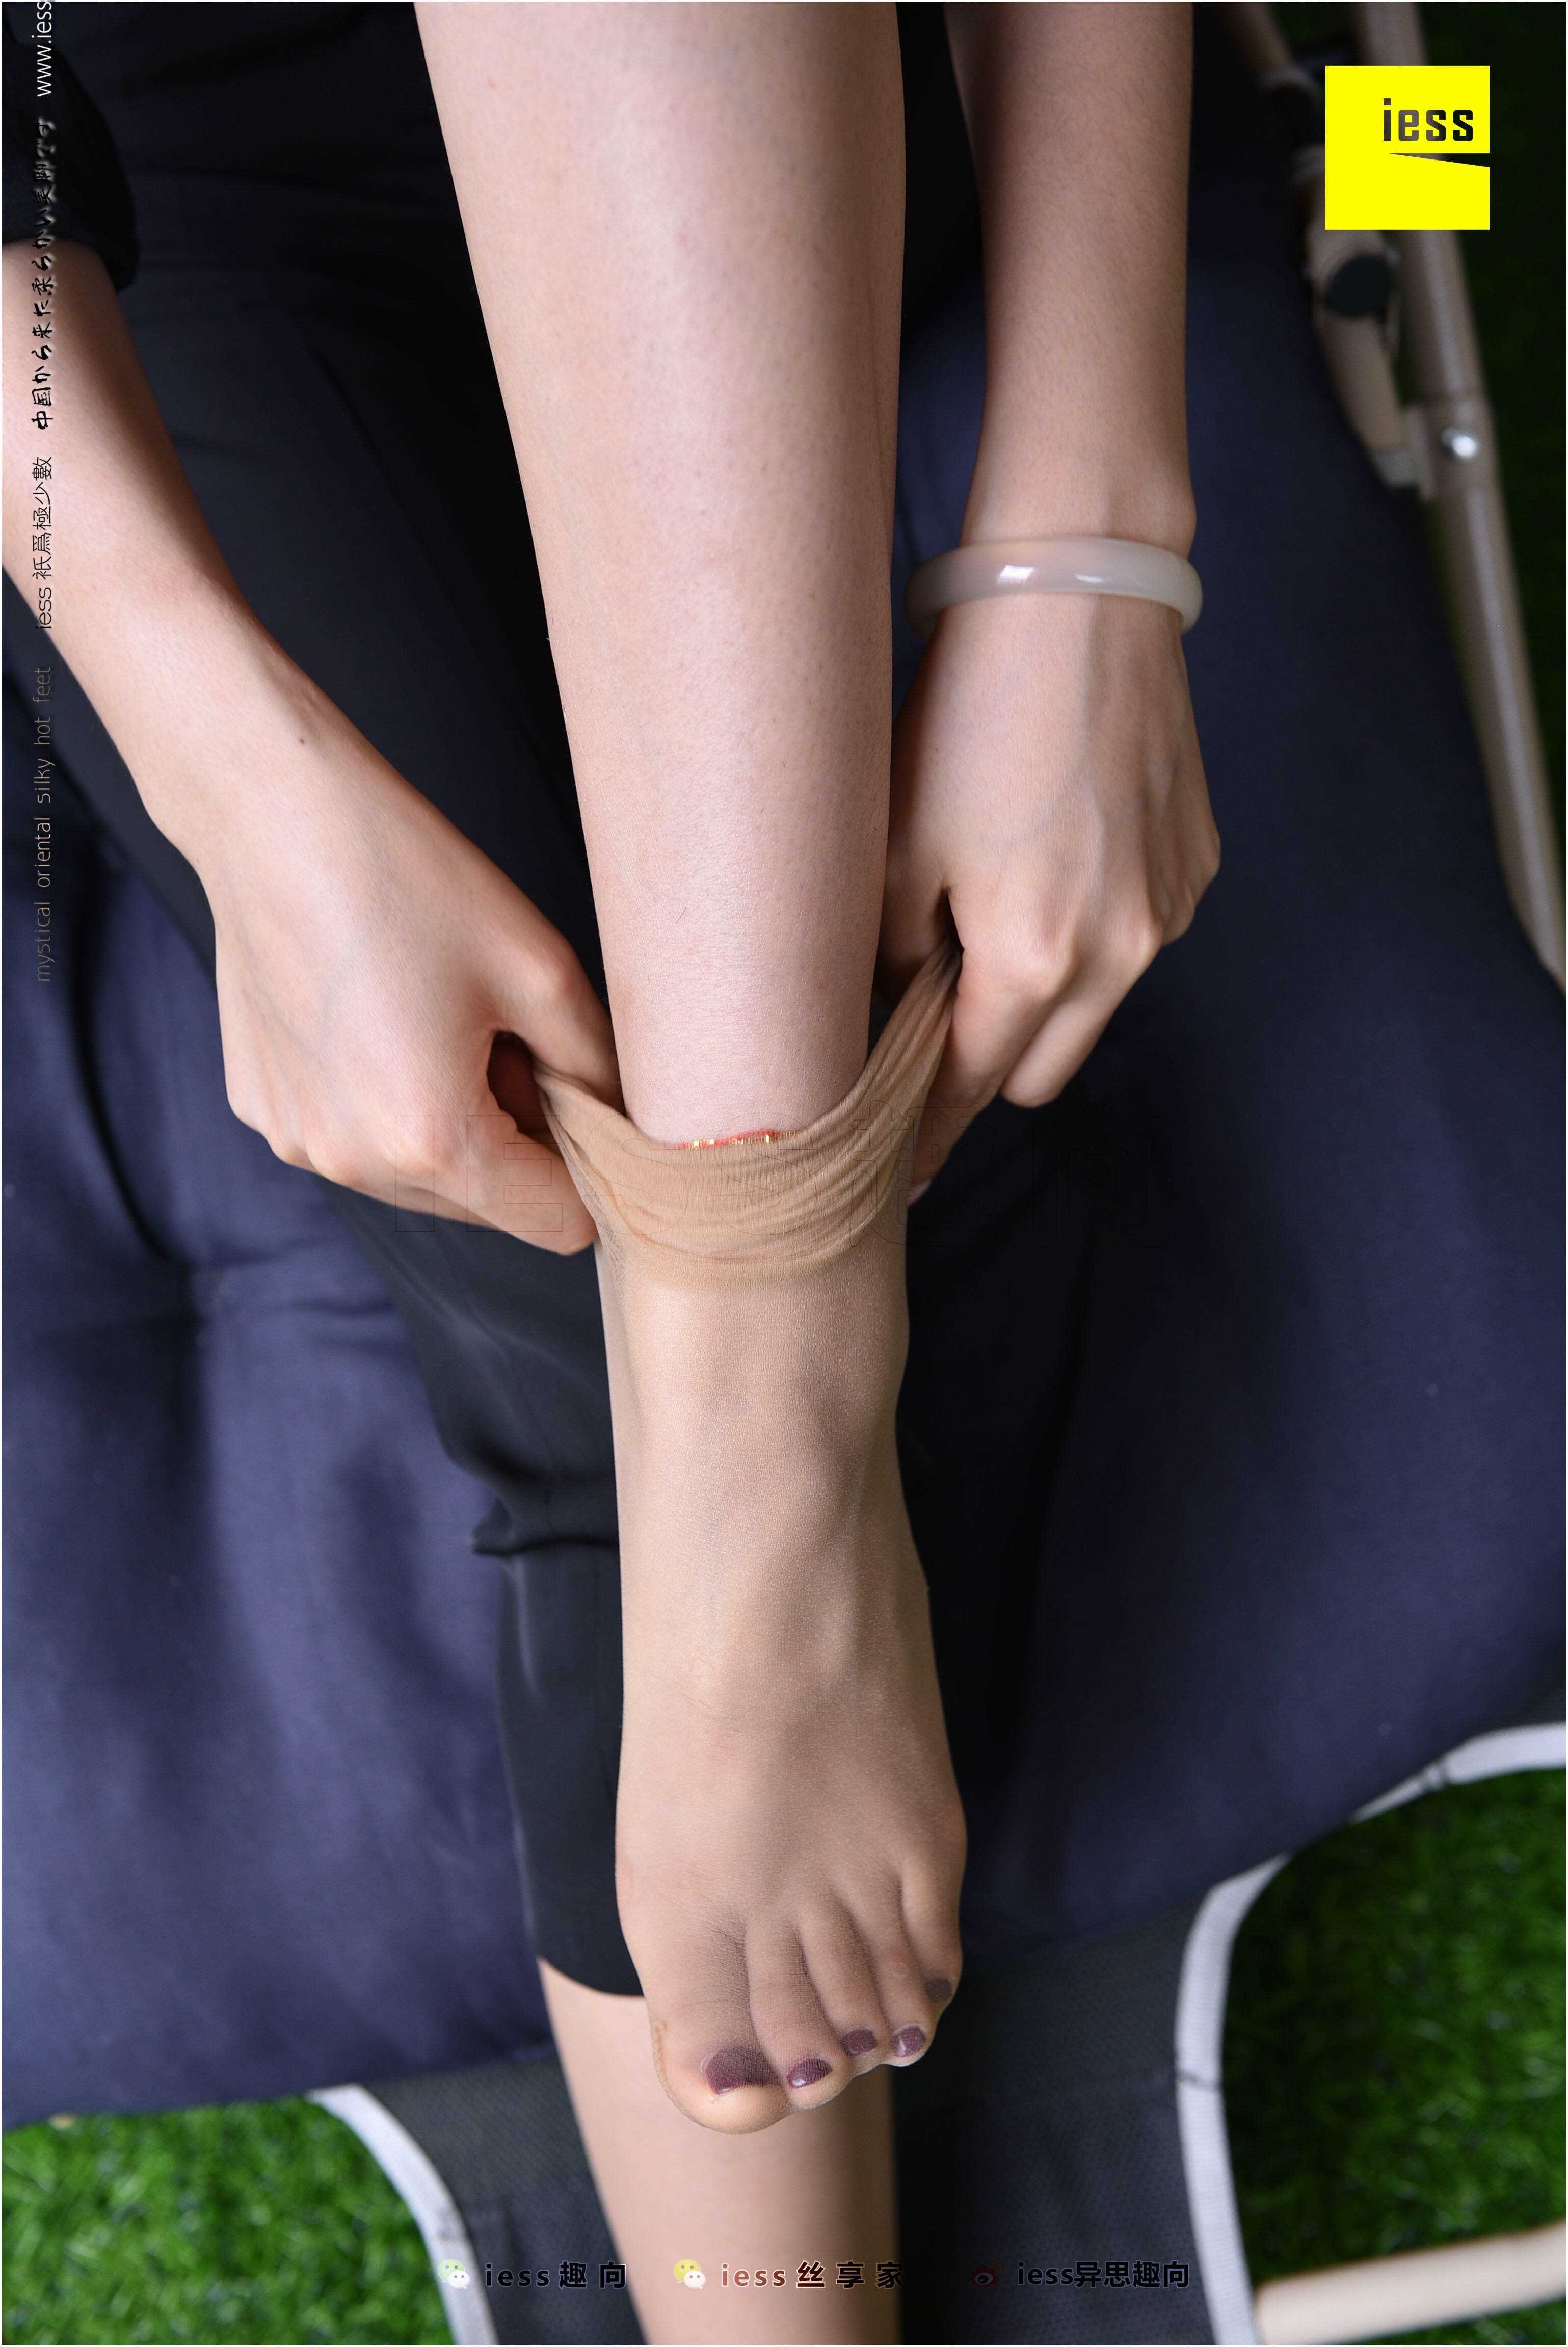 China Beauty Legs and feet 491